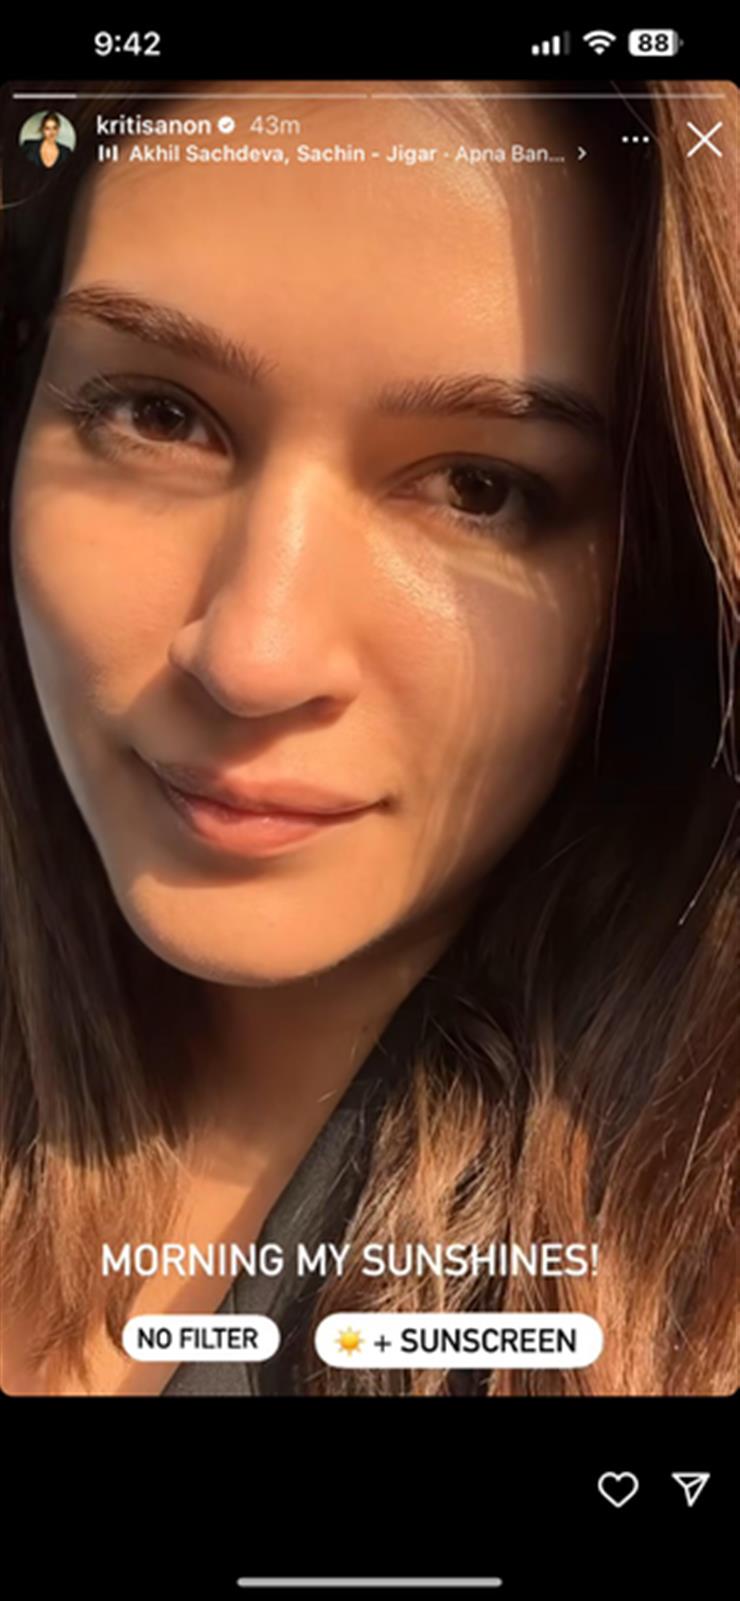 Kriti Sanon flaunts her morning ‘no filter’ golden glow: 'Sun plus sunscreen'